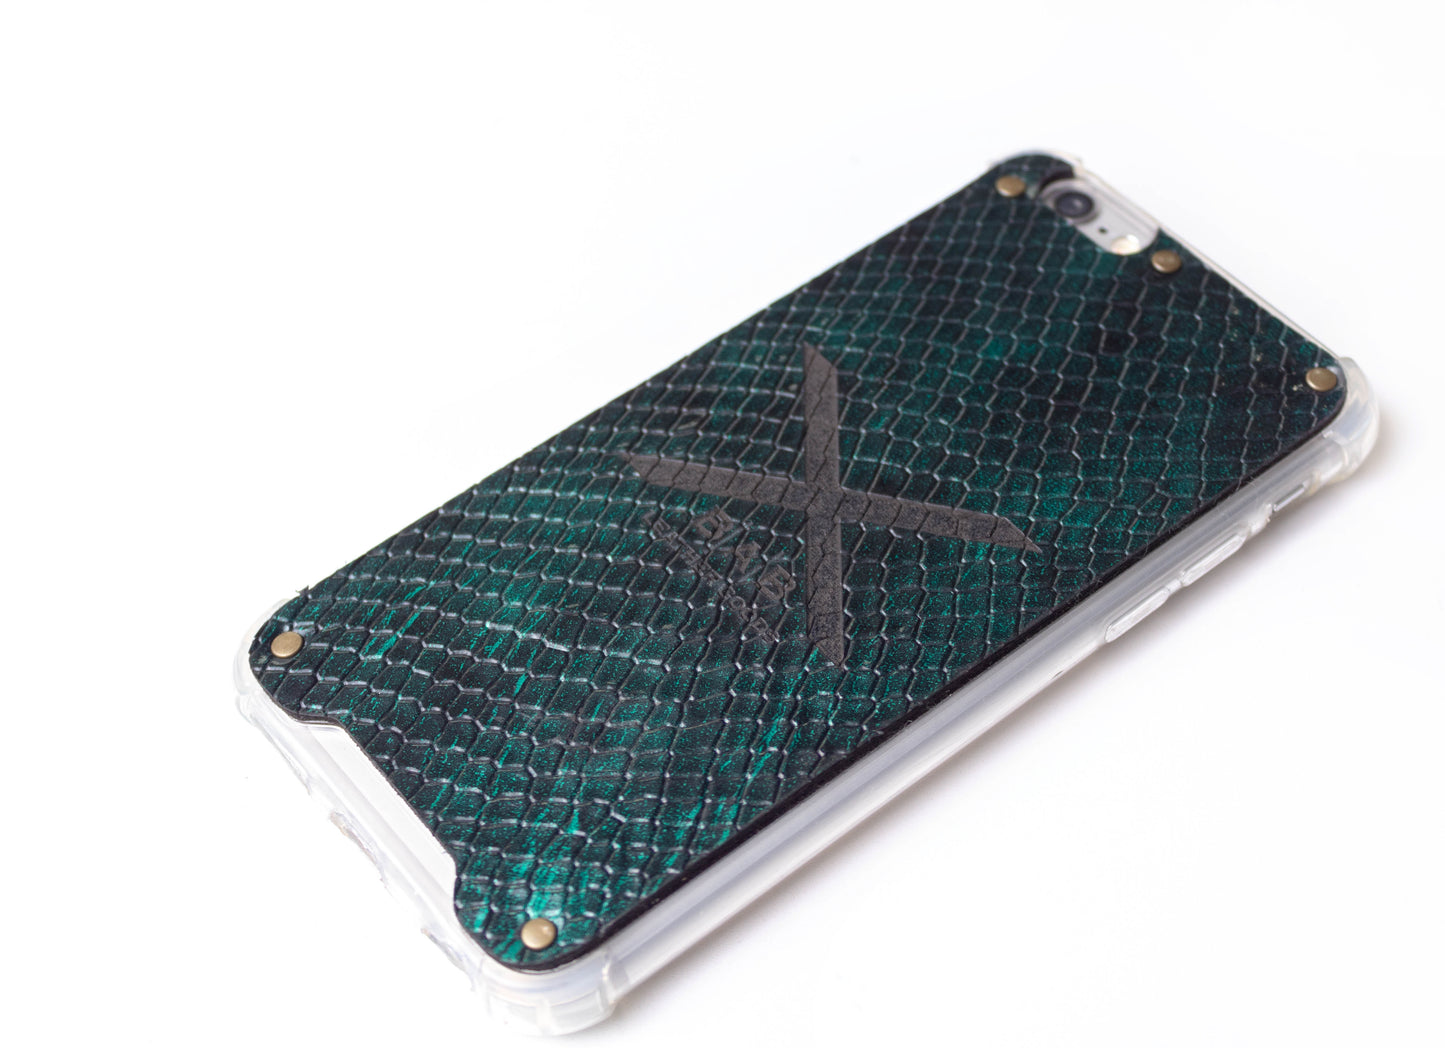 Capa para iPhone de Couro Genuíno Python Verde Texturizado cortado e gravado a laser, 5 Rebites de Bronze.- F36